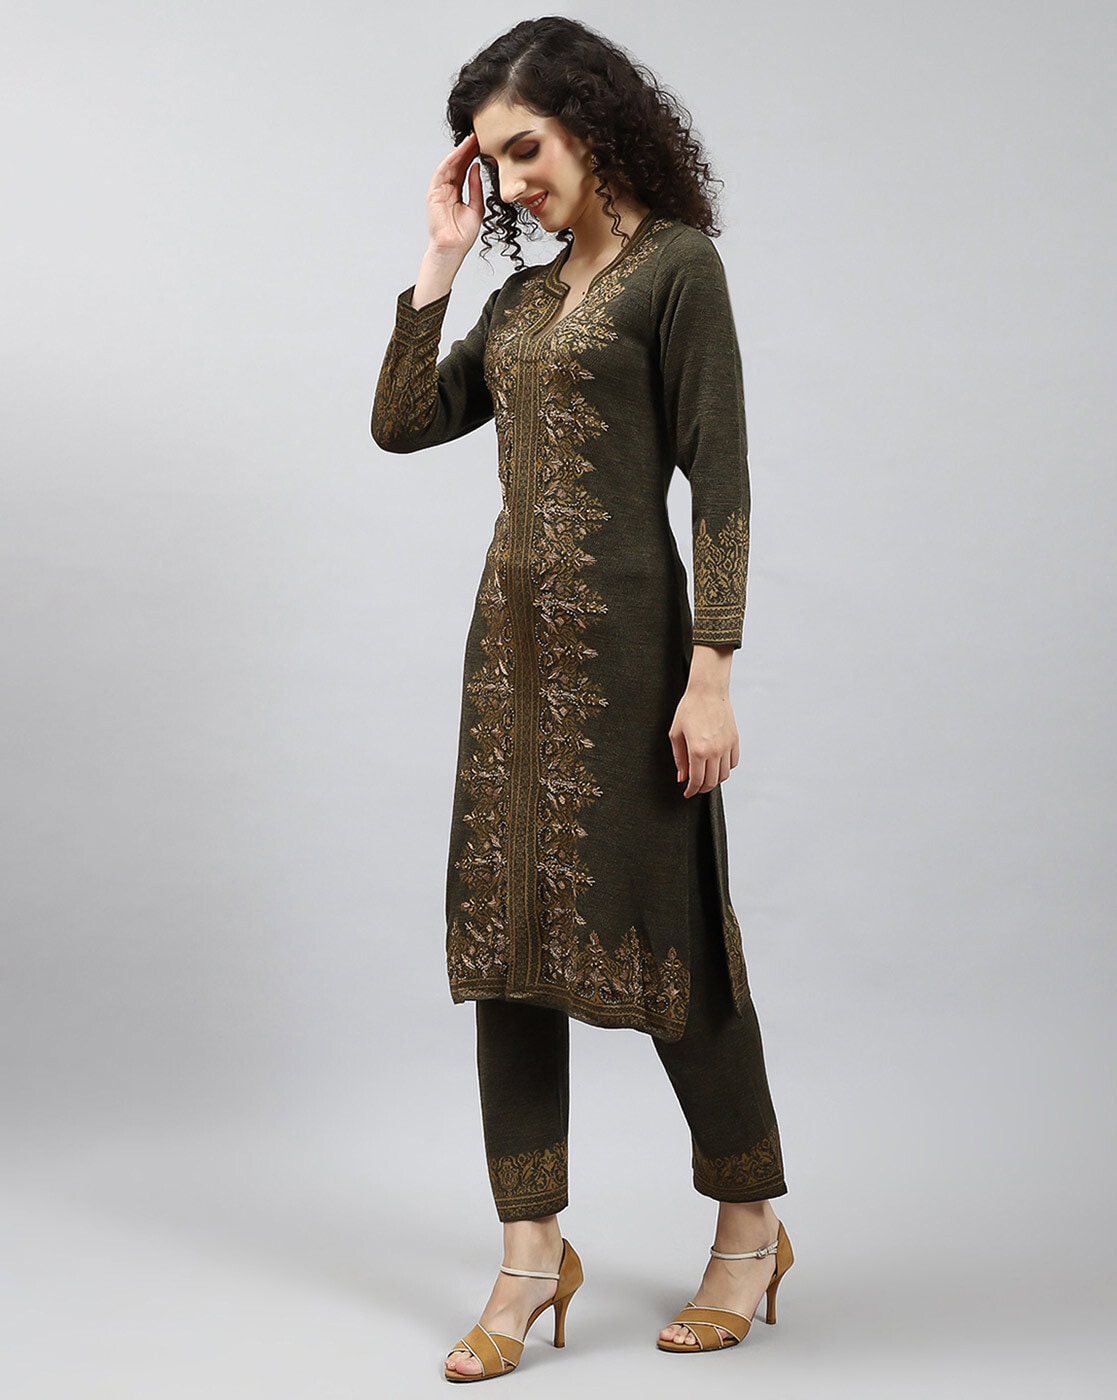 Printed Ladies Exclusive Design Fancy Full Sleeves Knee Length Woolen Kurti  For Party And Office Wear at Best Price in Ludhiana | Suresh Bros